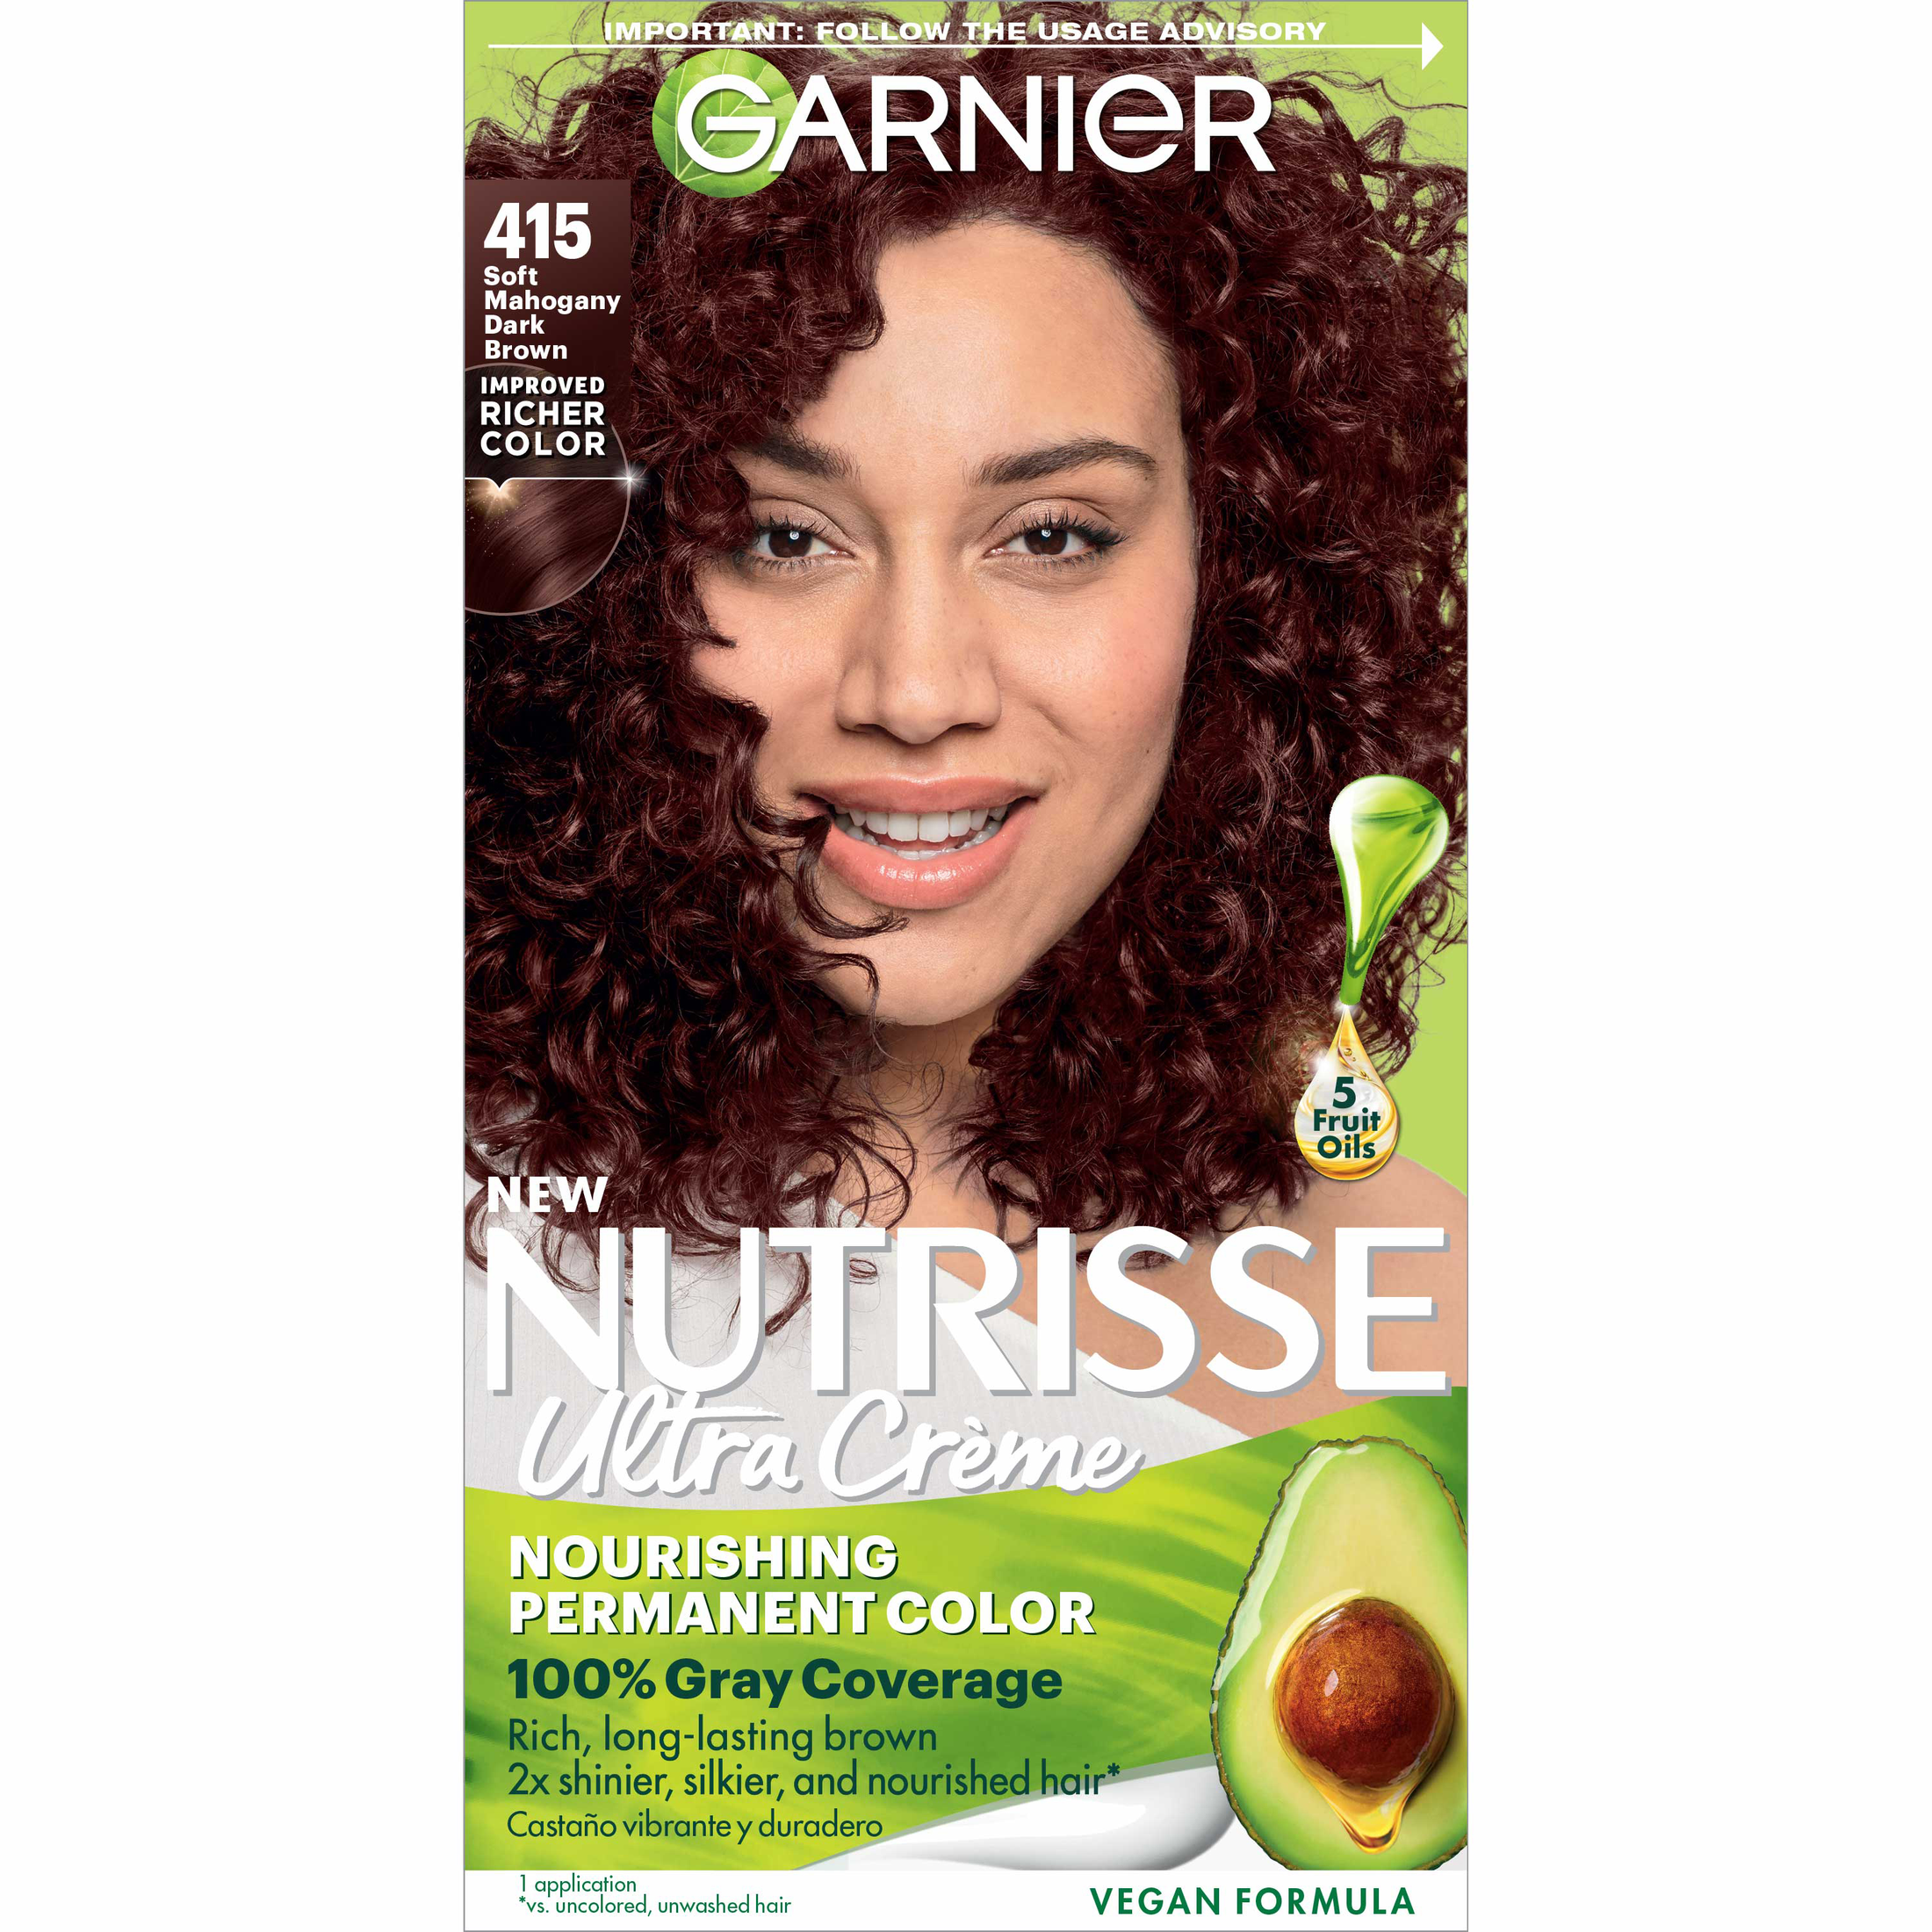 Garnier Nutrisse Nourishing Hair Color, 415 Soft Mahogany Dark Brown - image 1 of 11